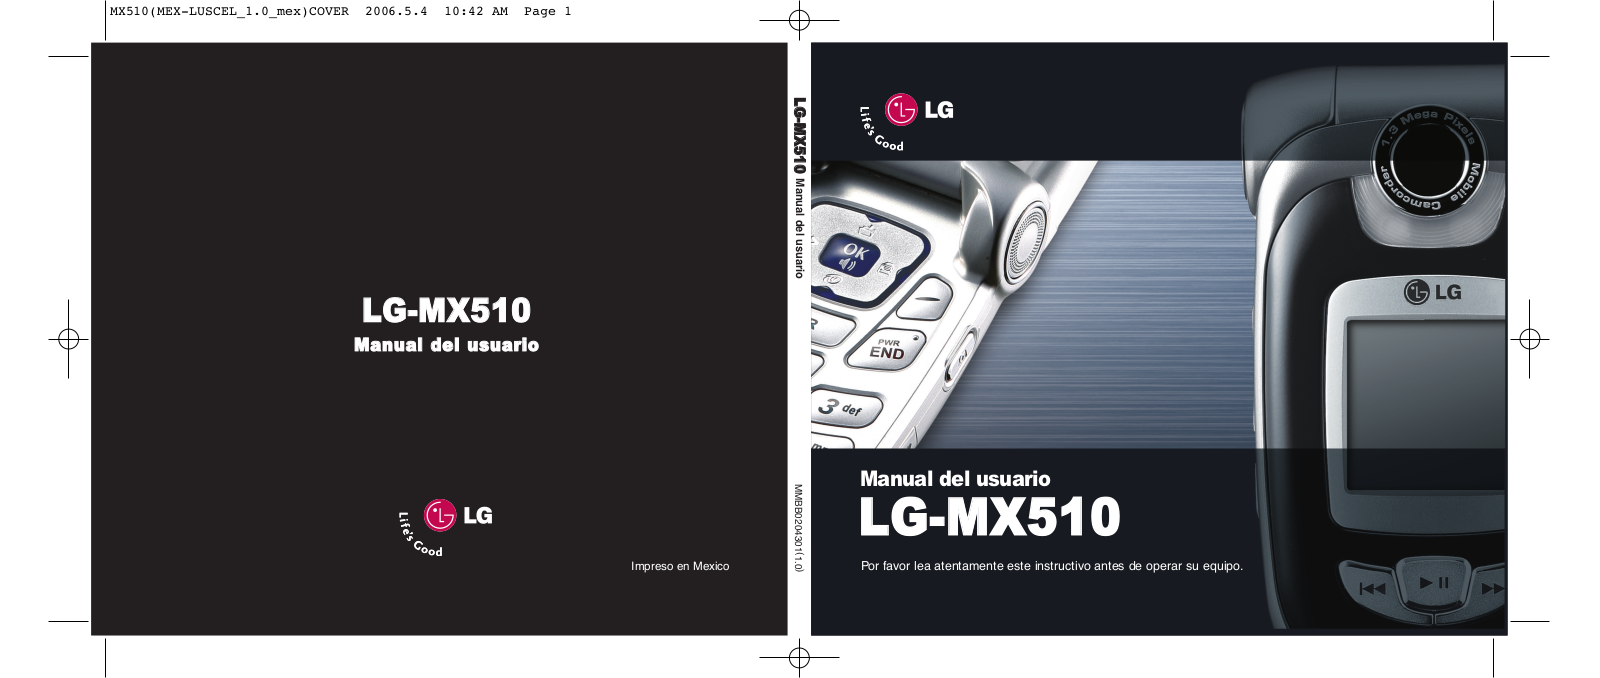 LG LGMX510 Owner's Manual